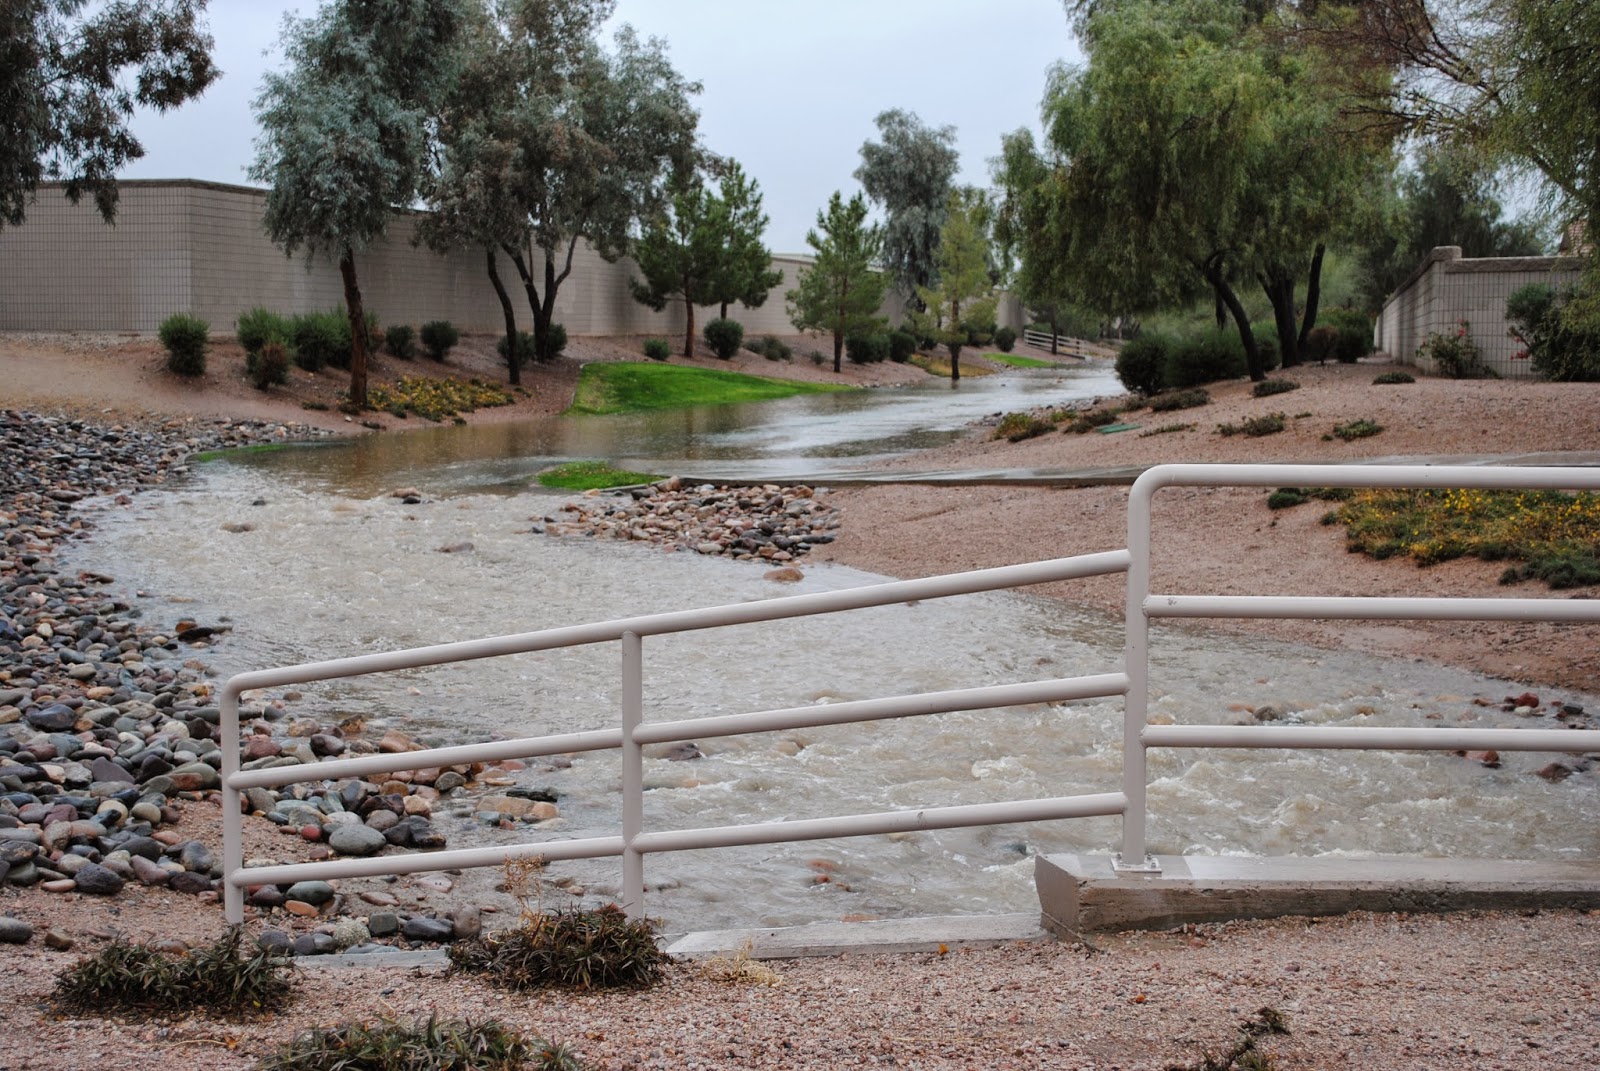 Heavy rains drain through the greenbelts in Phoenix